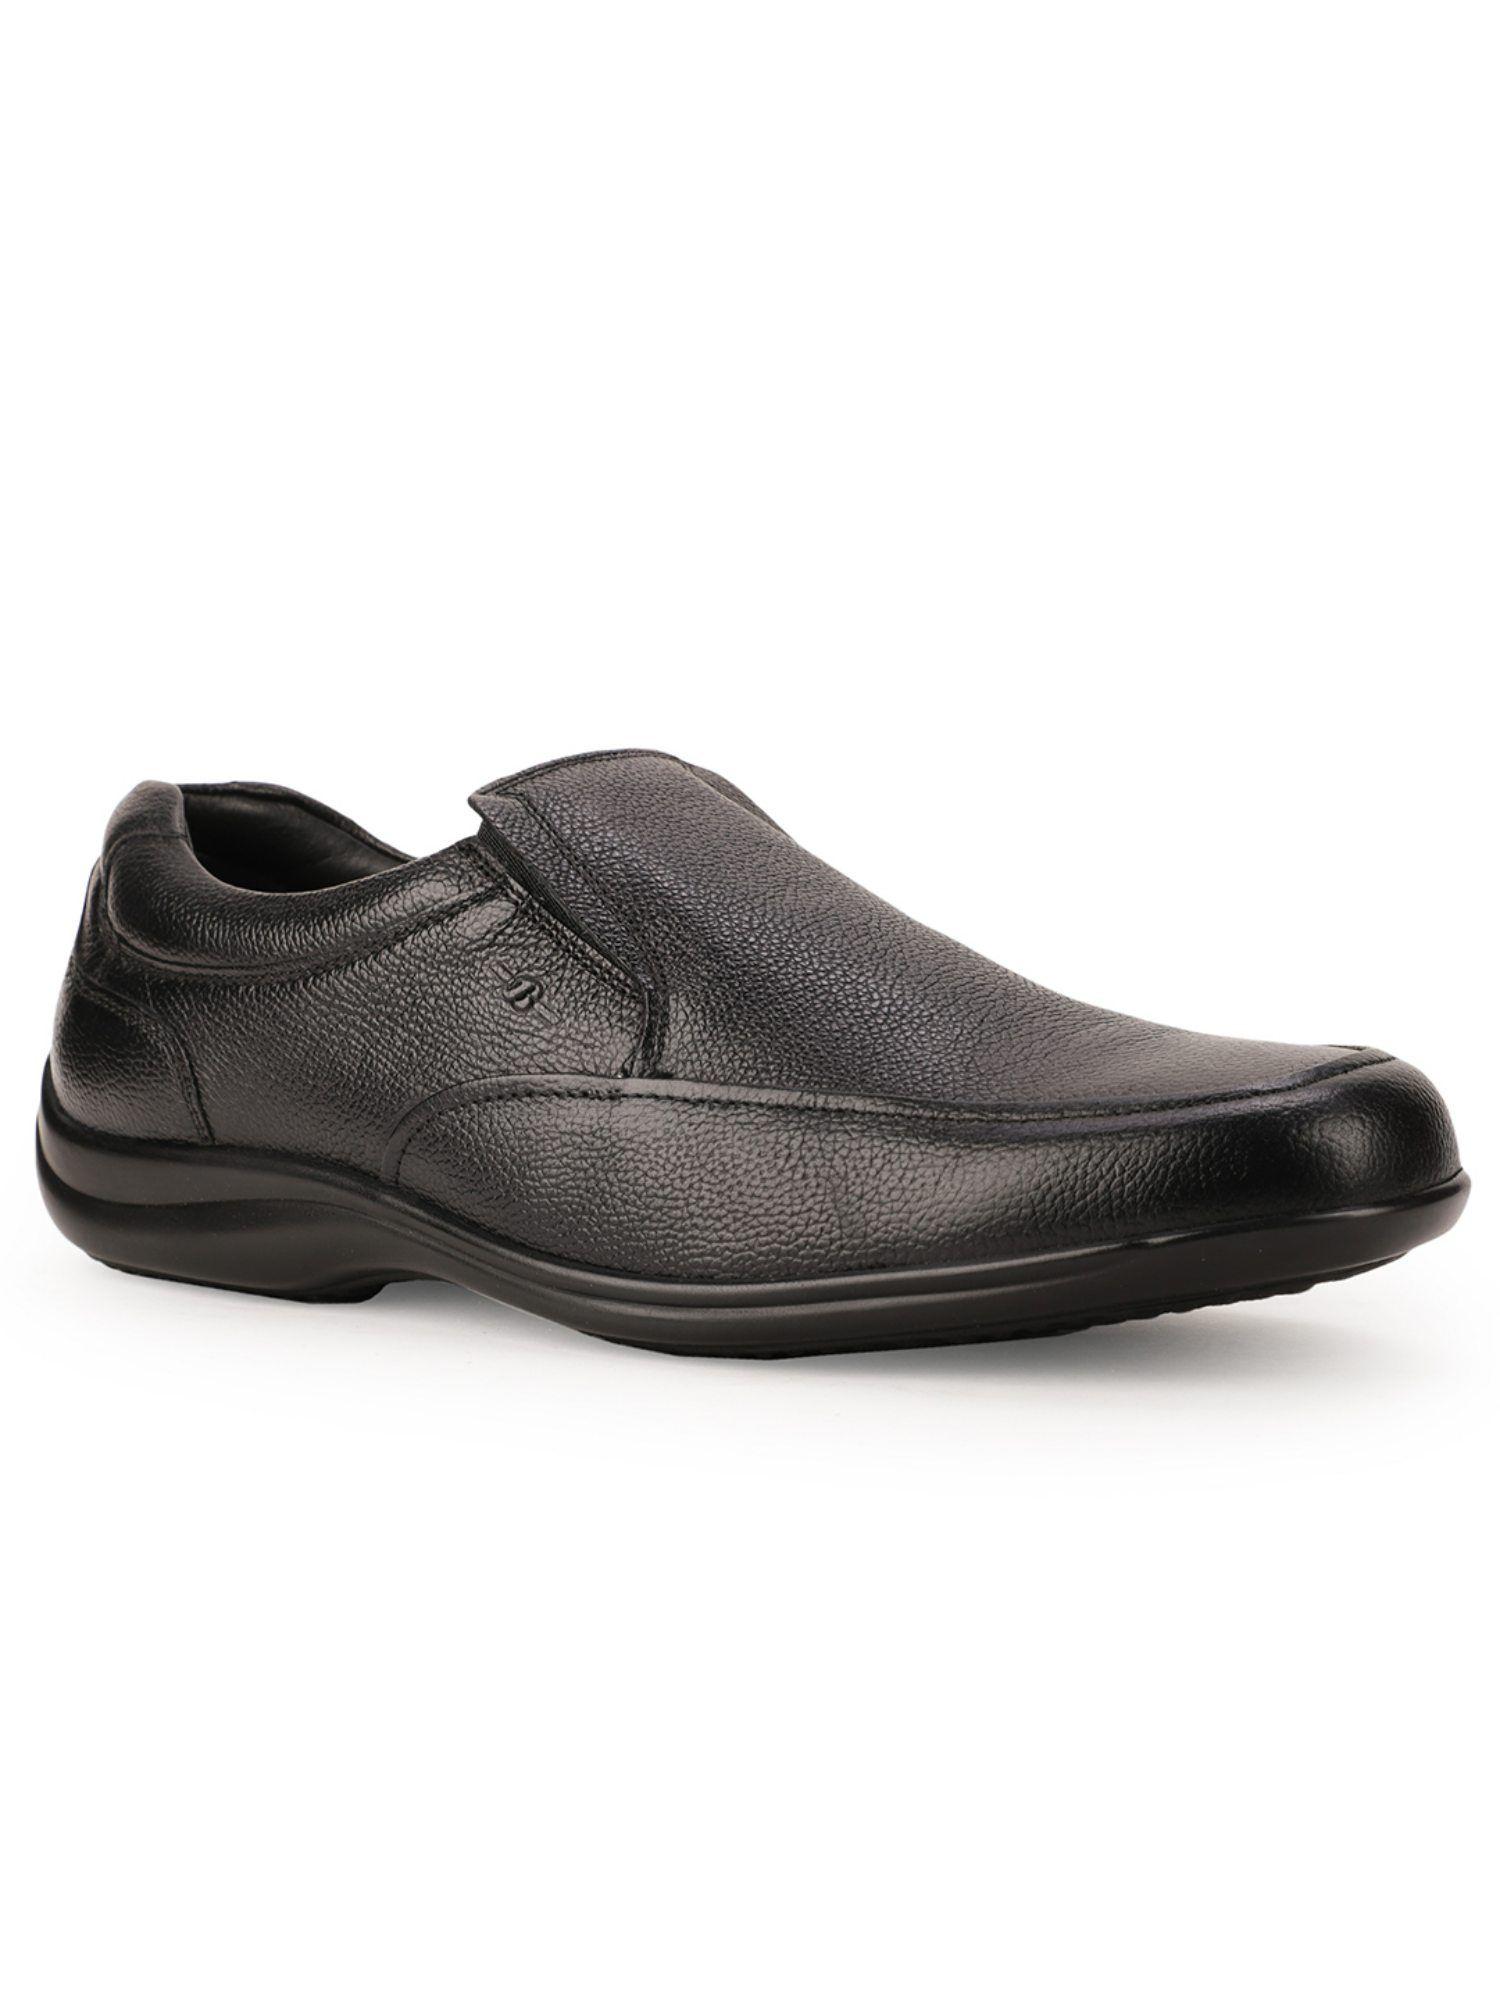 solid black formal shoes